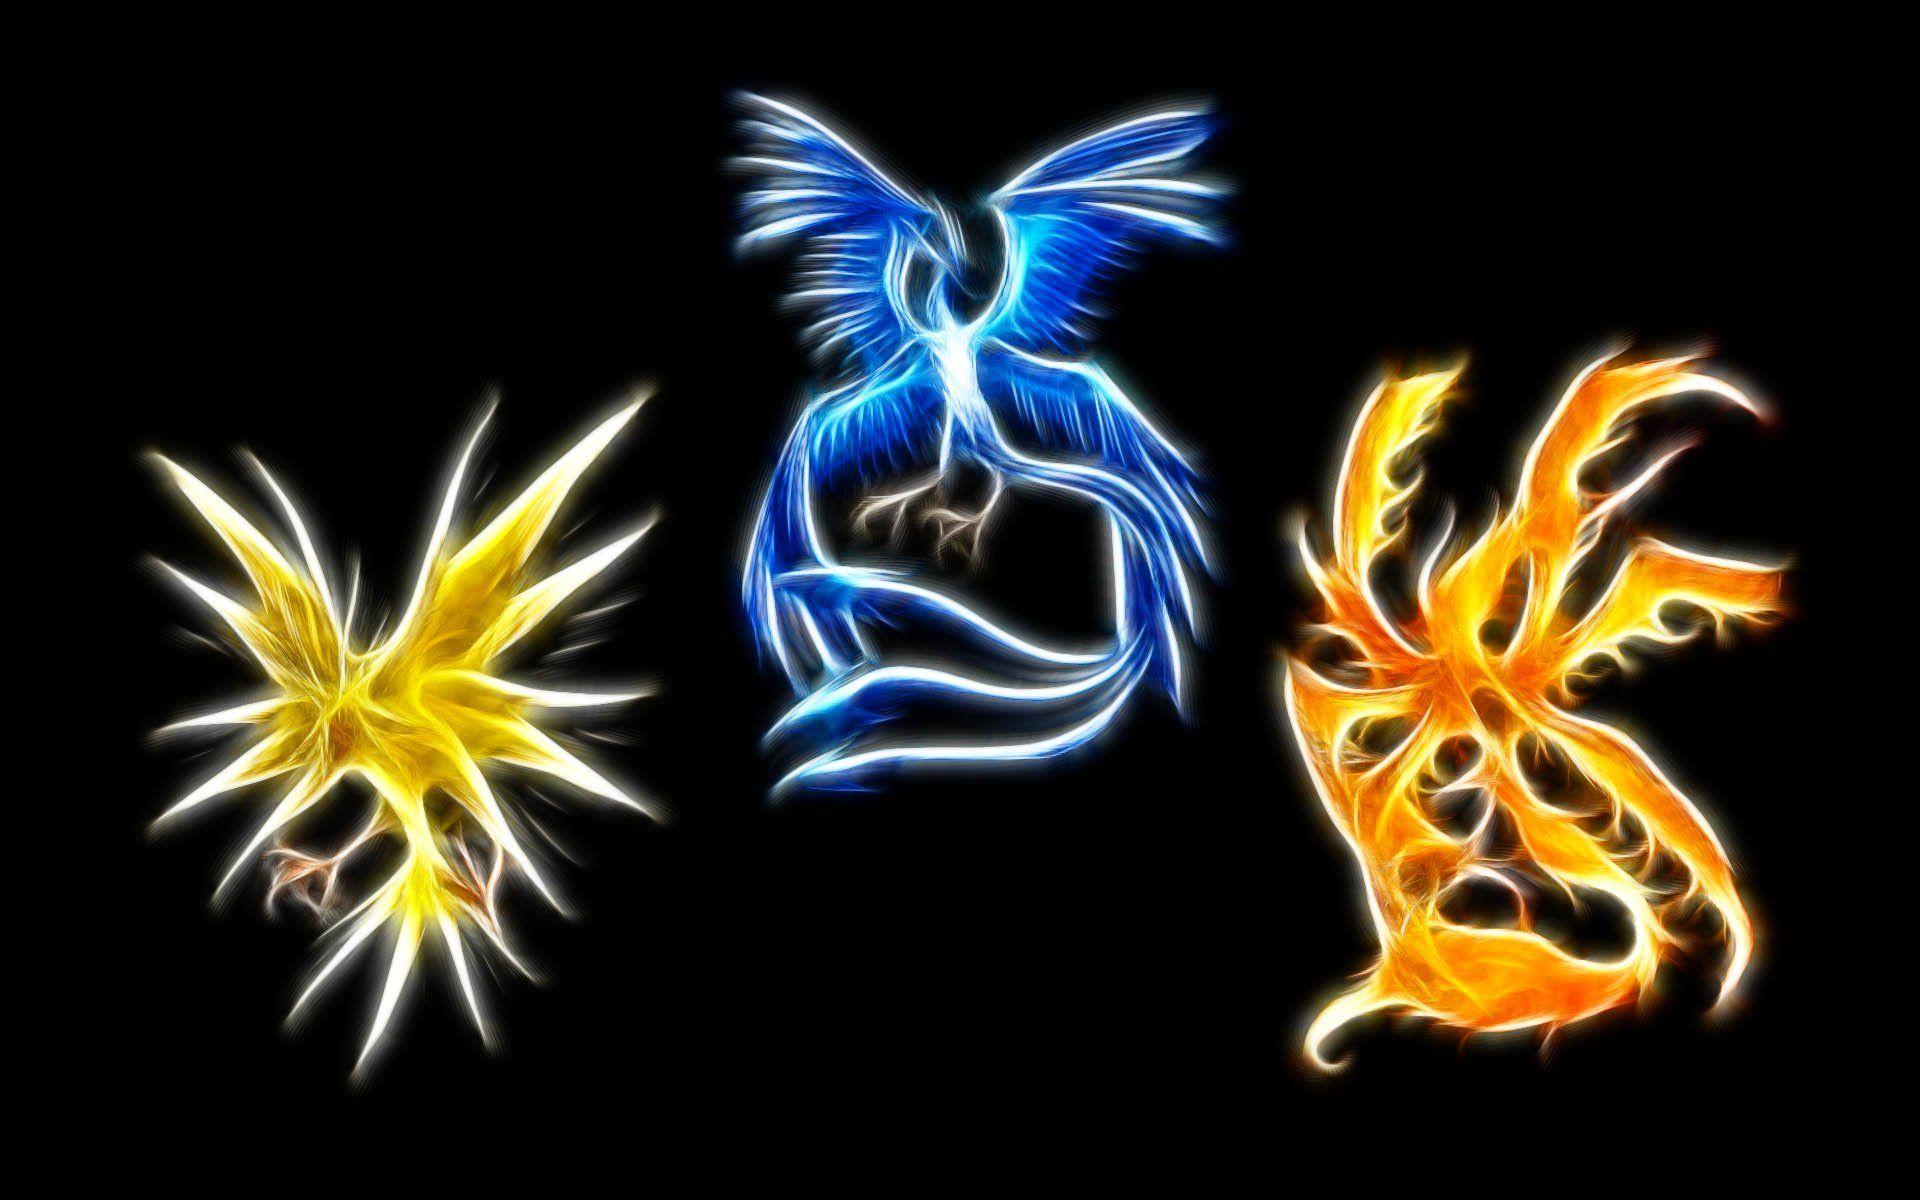 Zapdos (Pokémon) HD Wallpaper and Background Image